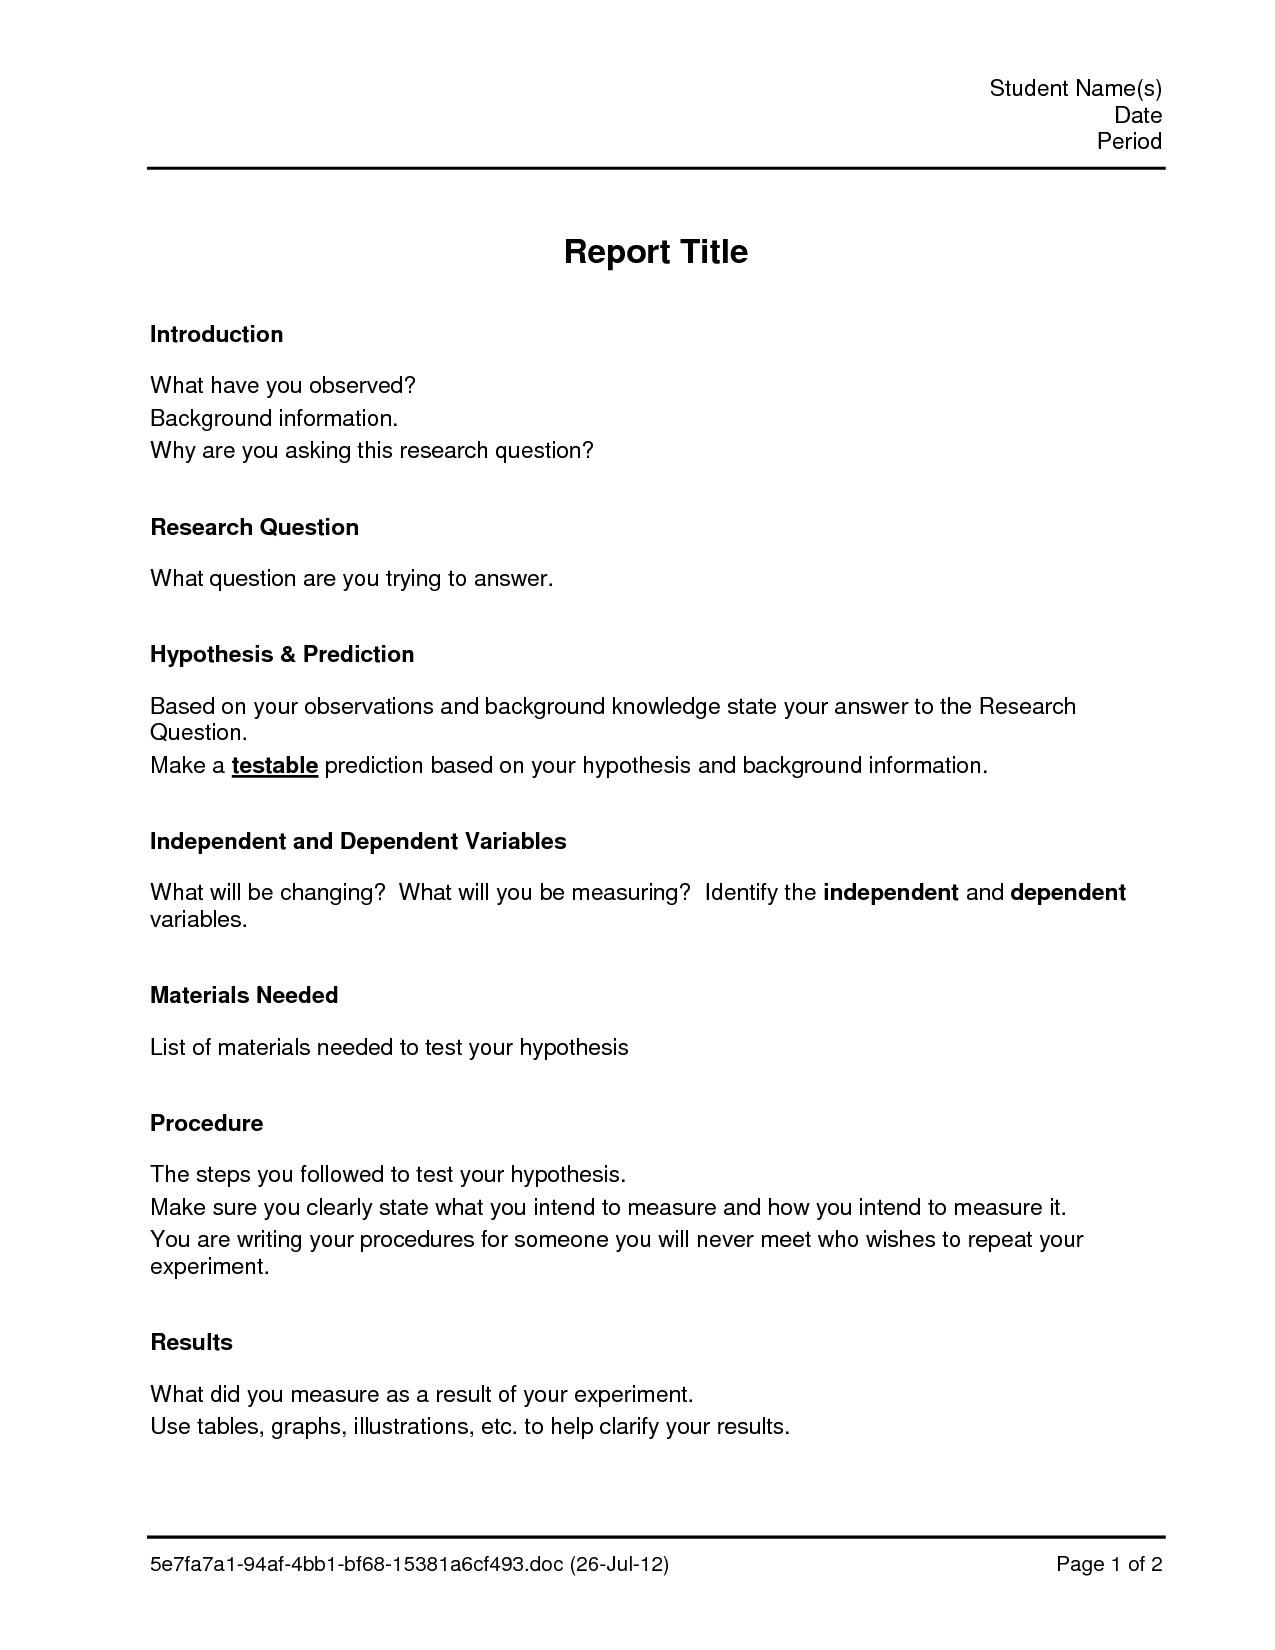 Lab Report Template | E Commercewordpress Inside Lab Report Template Word